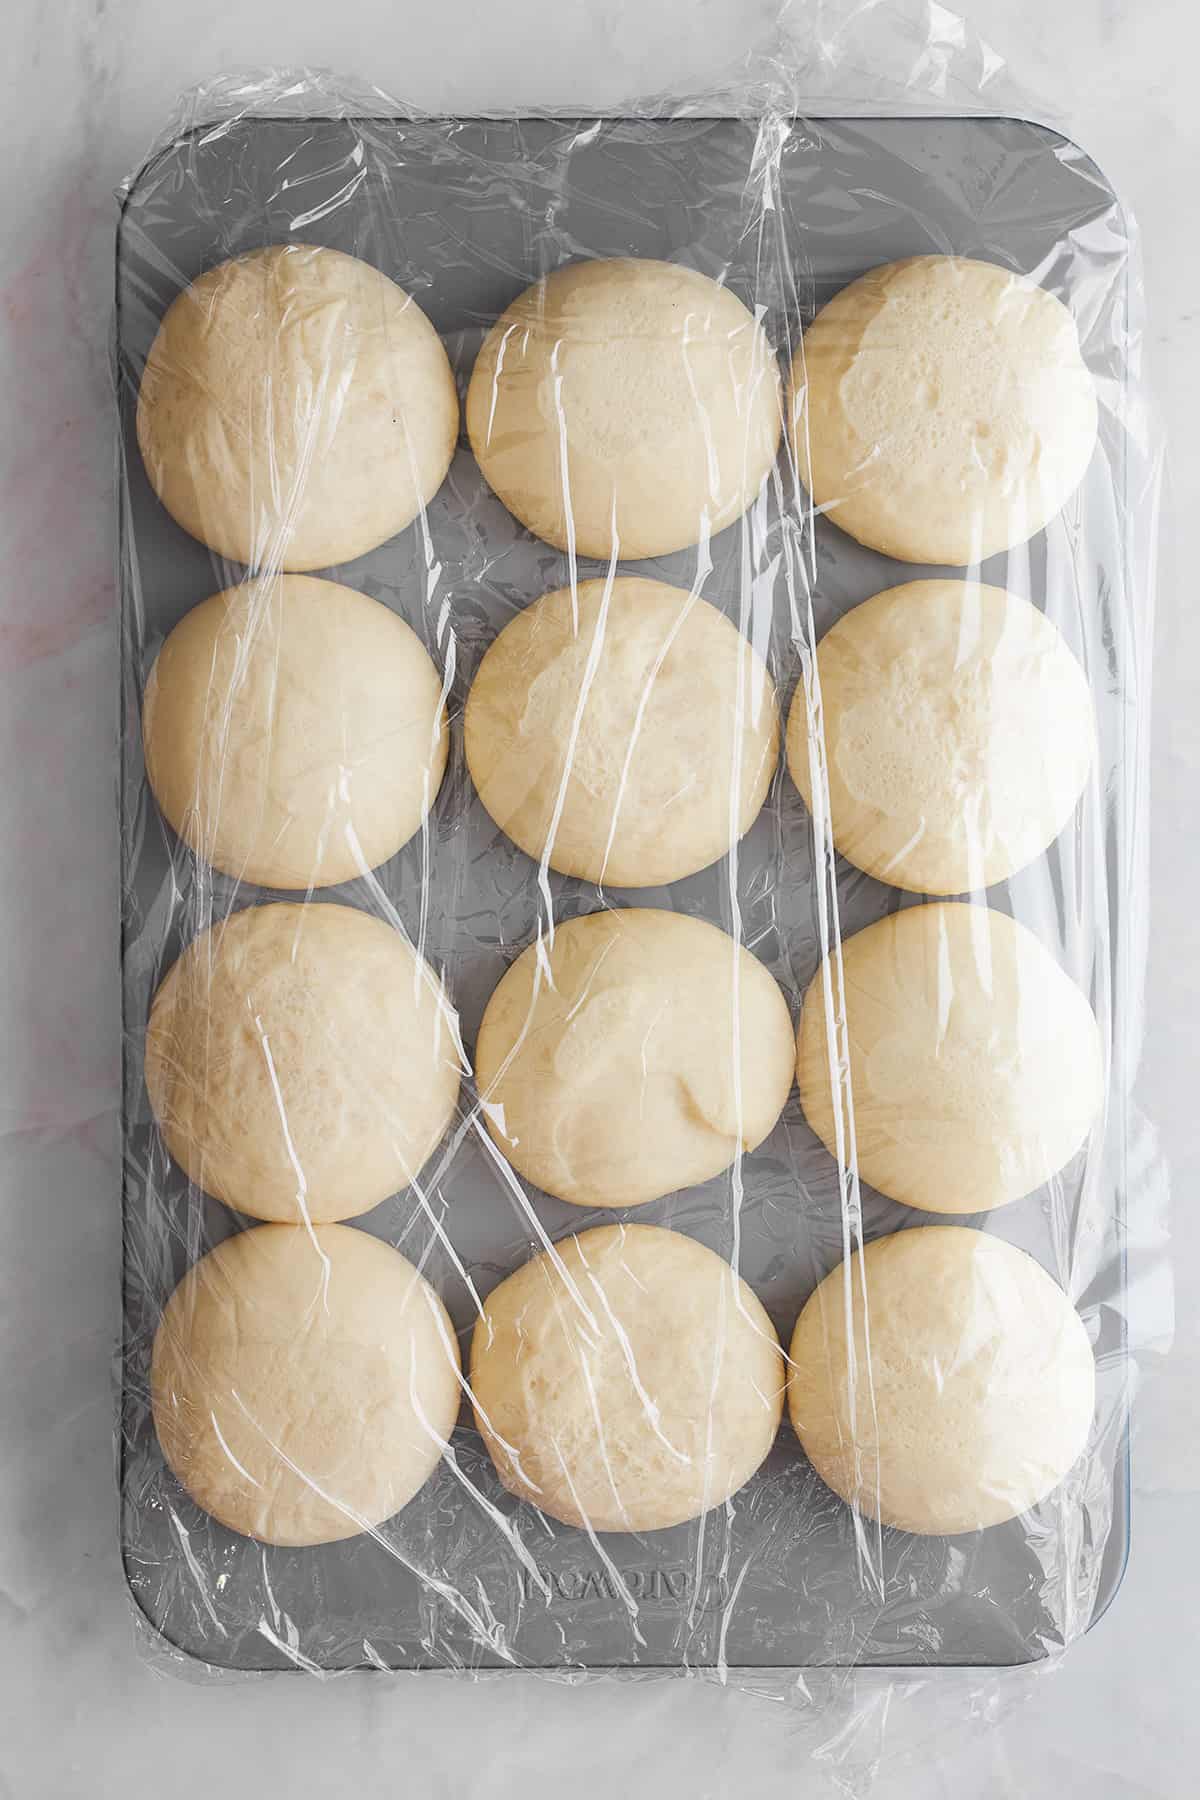 Risen bread rolls in a muffin tin. 